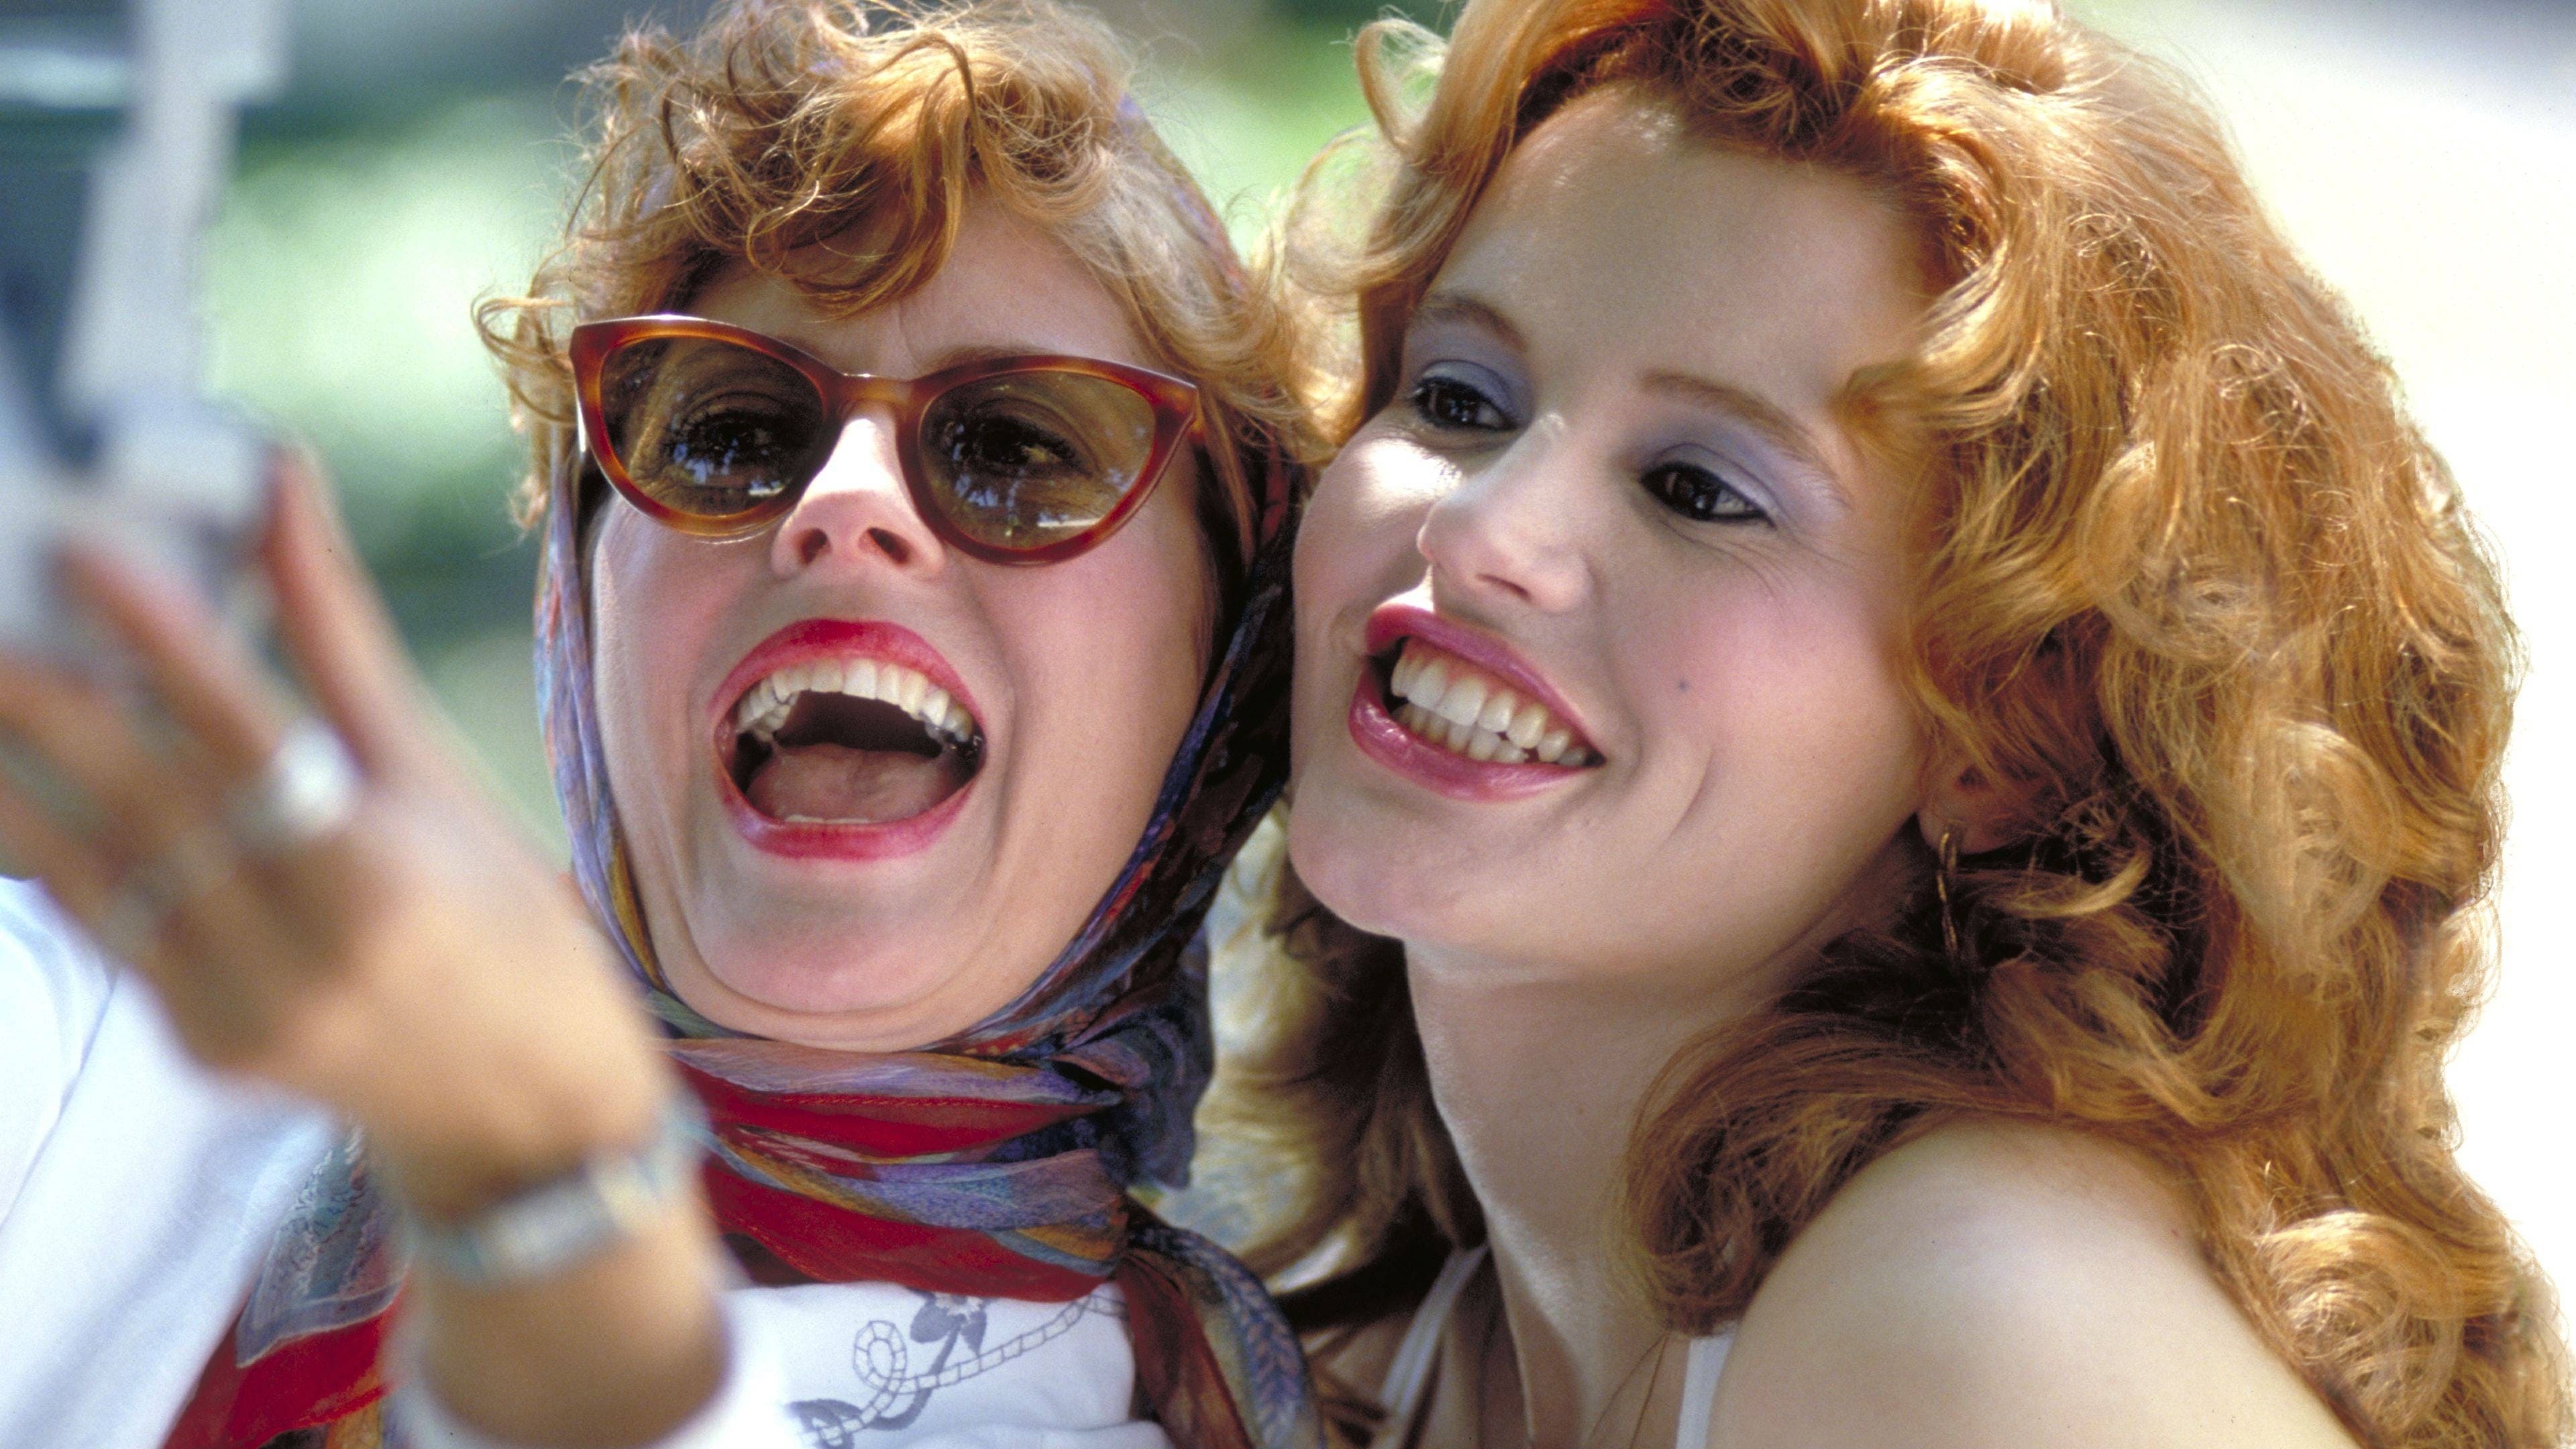 Thelma & Louise (1991) — The Movie Database (TMDB)